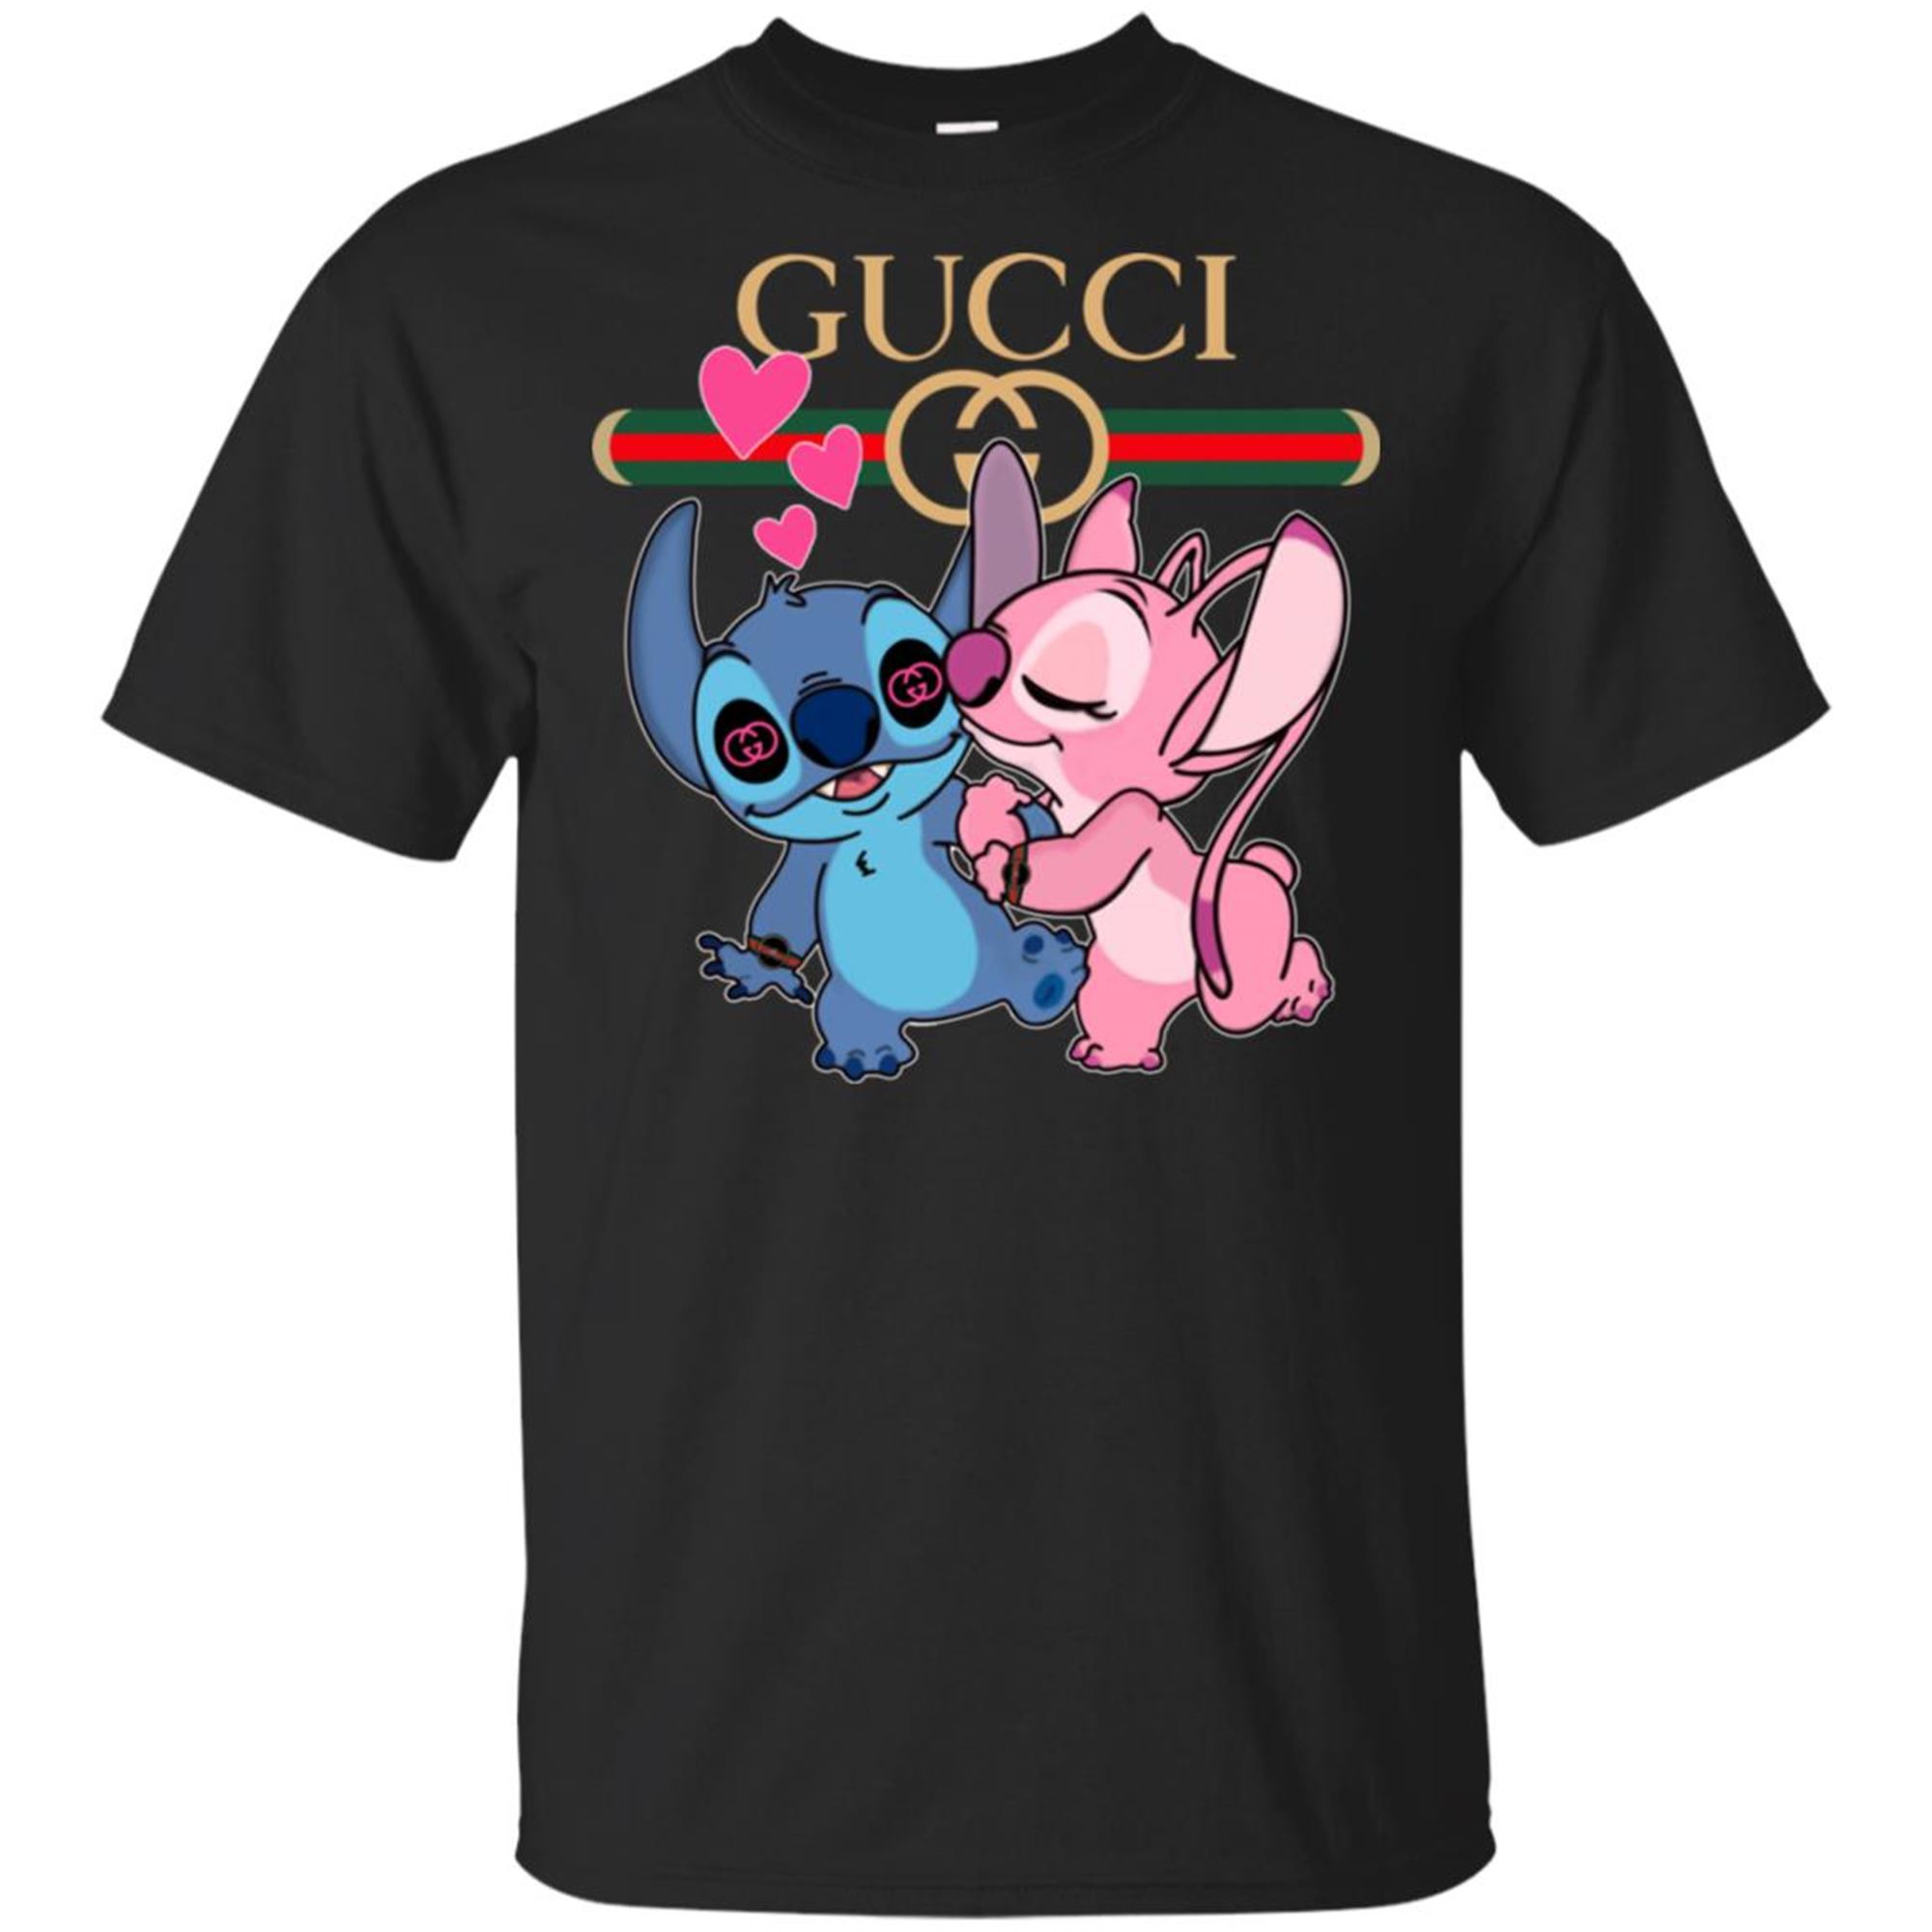 Gucci X Disney Stitck Unisex T-shirt Tshirts Black